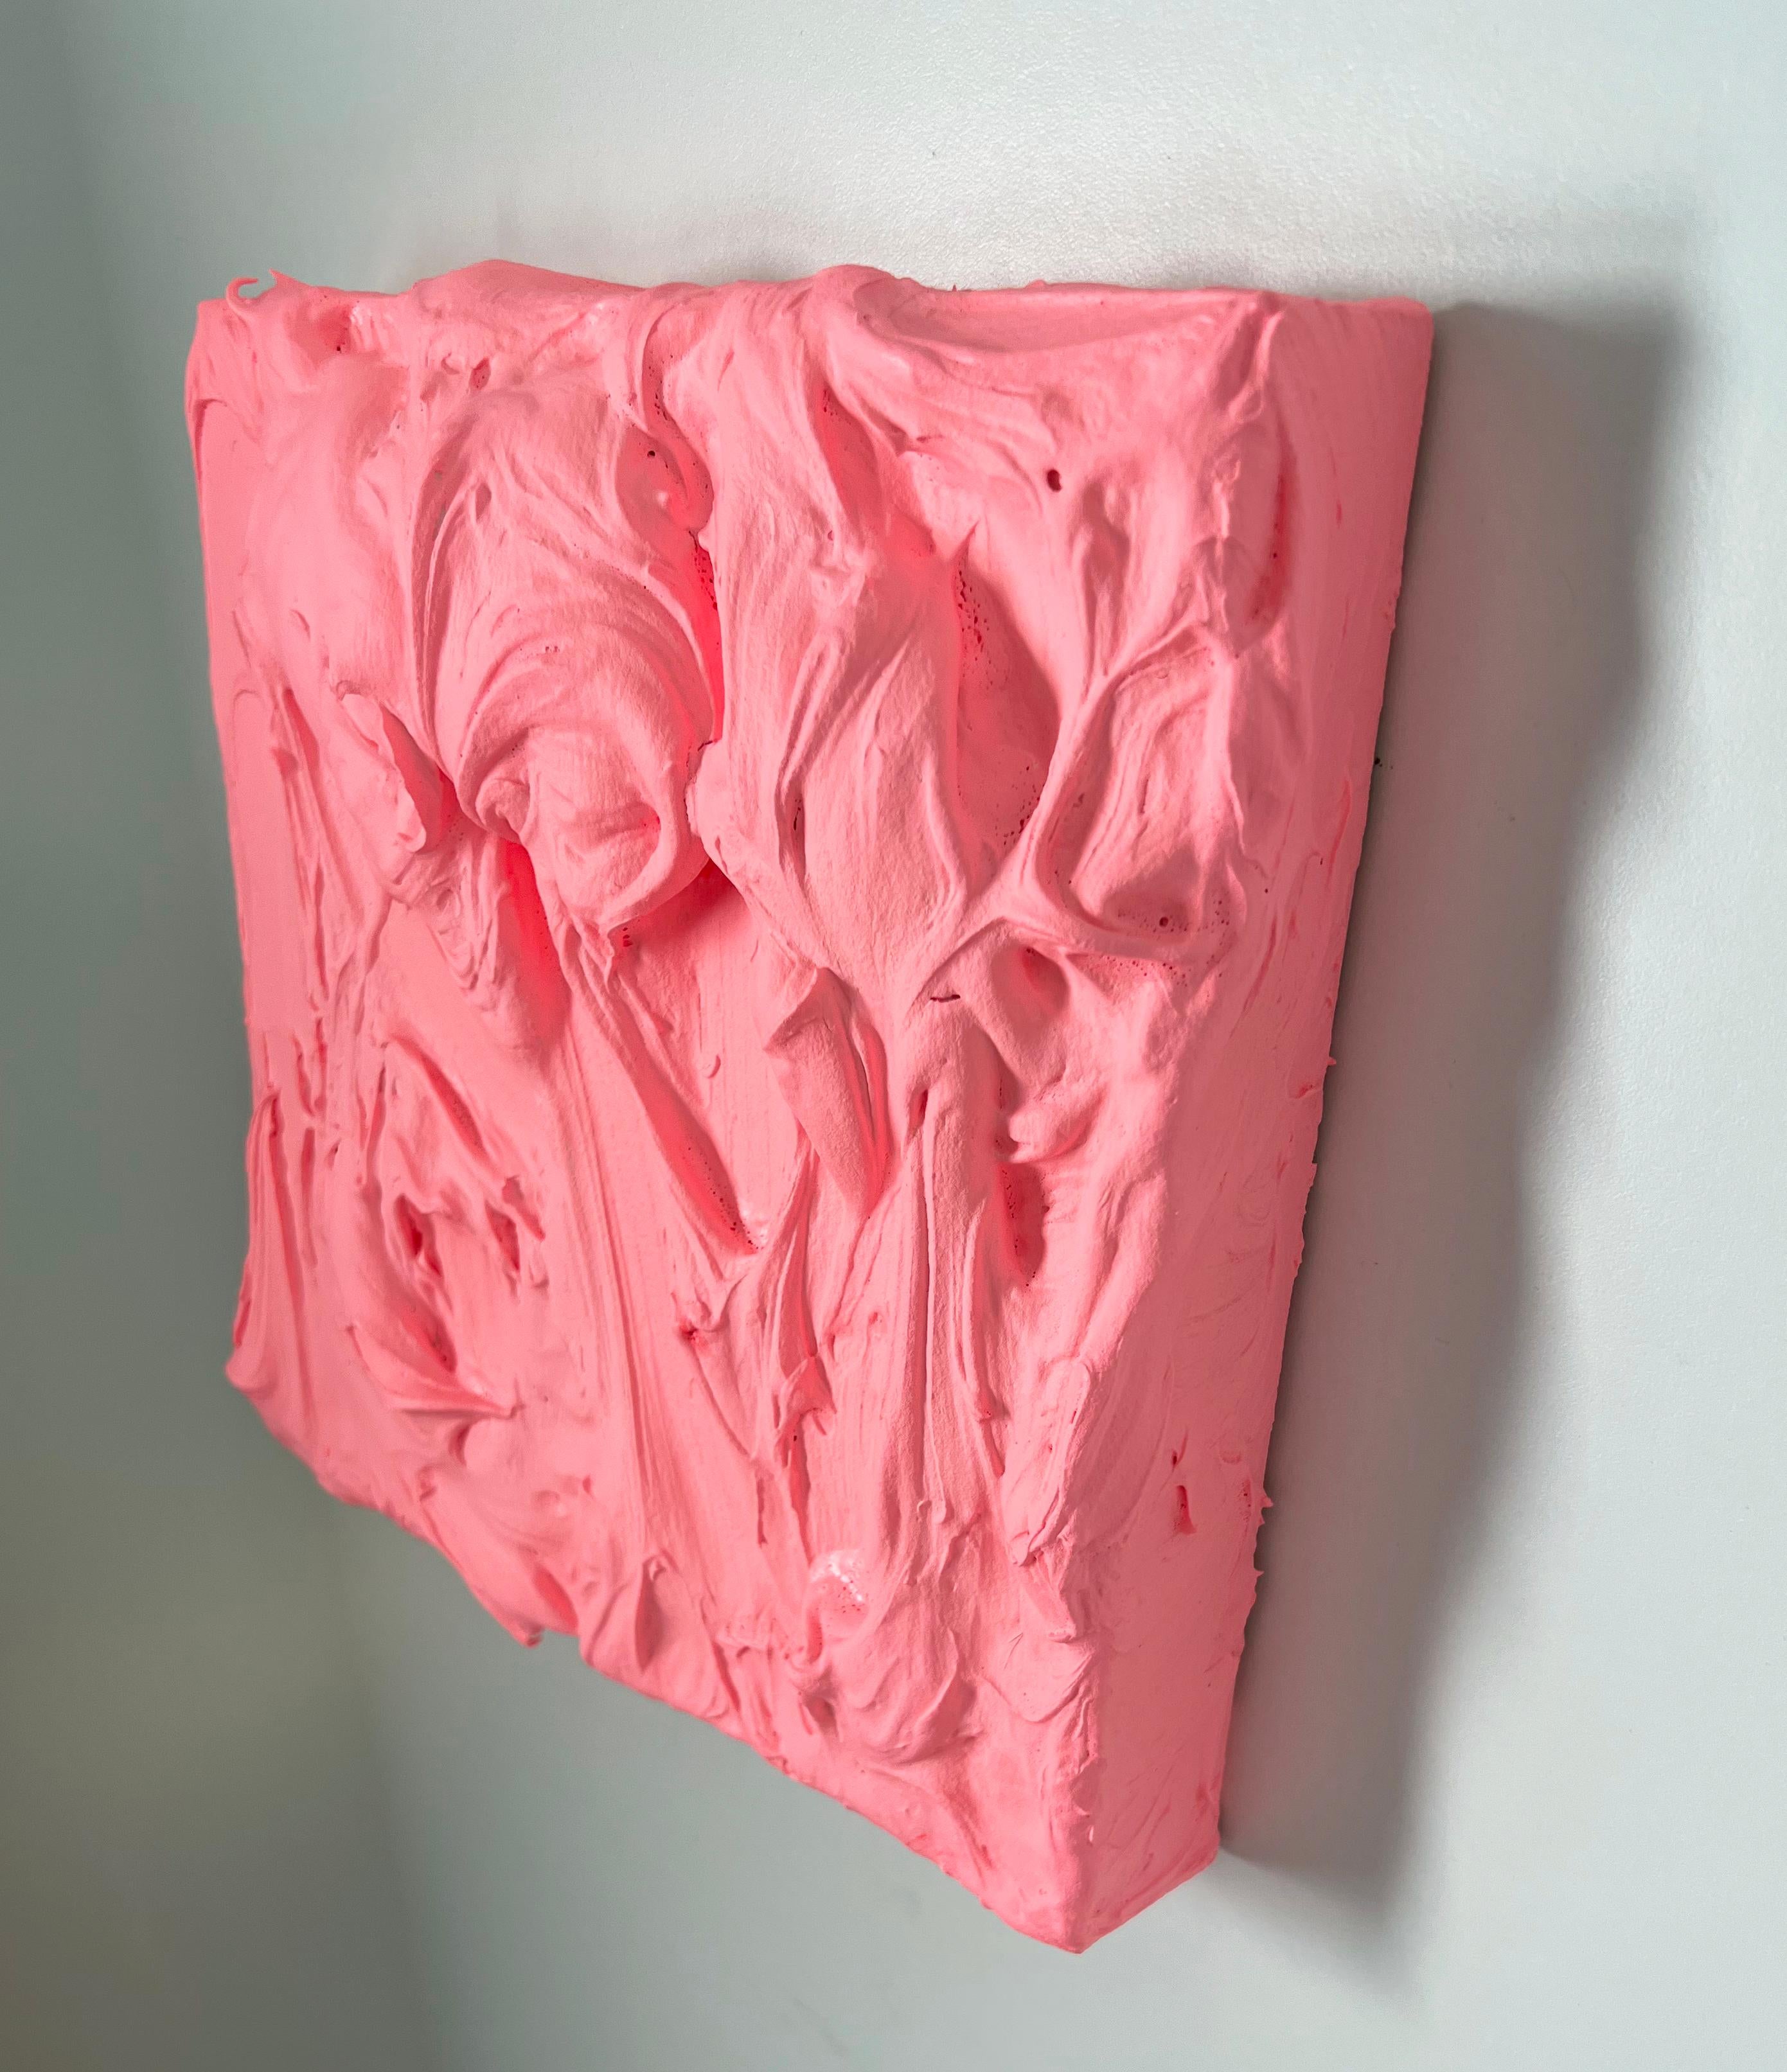  80's Peach Excess (Impasto rosa dicke Malerei monochrome Pop Quadrat Design) (Pop-Art), Painting, von Chloe Hedden